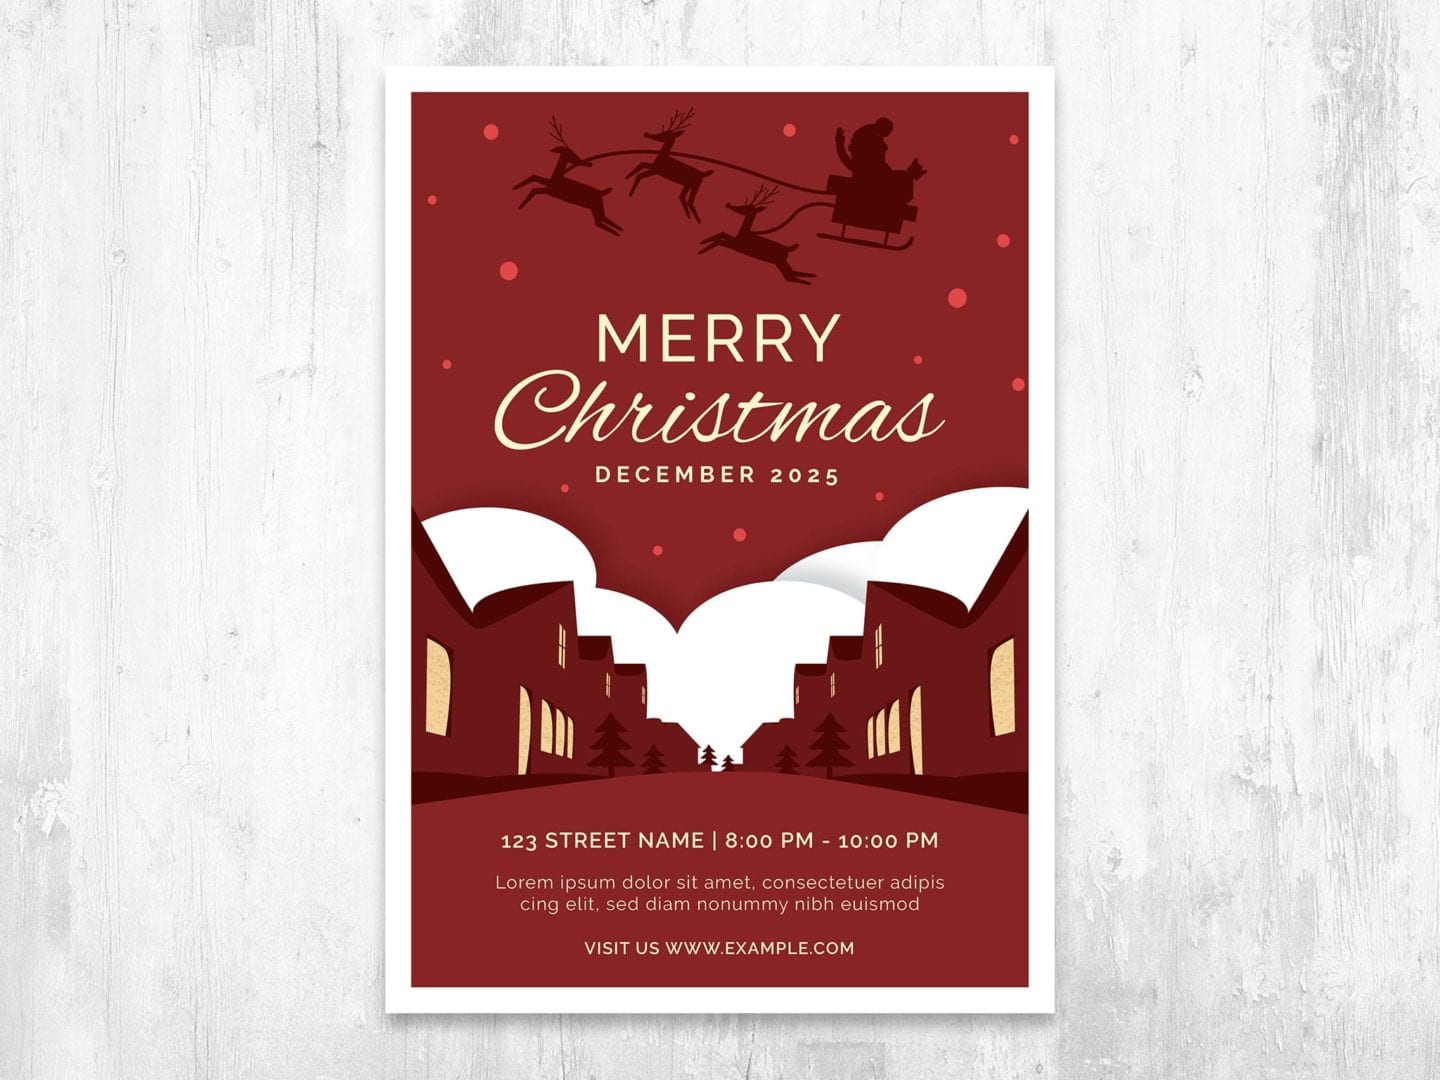 Christmas Card Templates - Adobe Illustrator, Vector, EPS - BrandPacks Throughout Adobe Illustrator Christmas Card Template